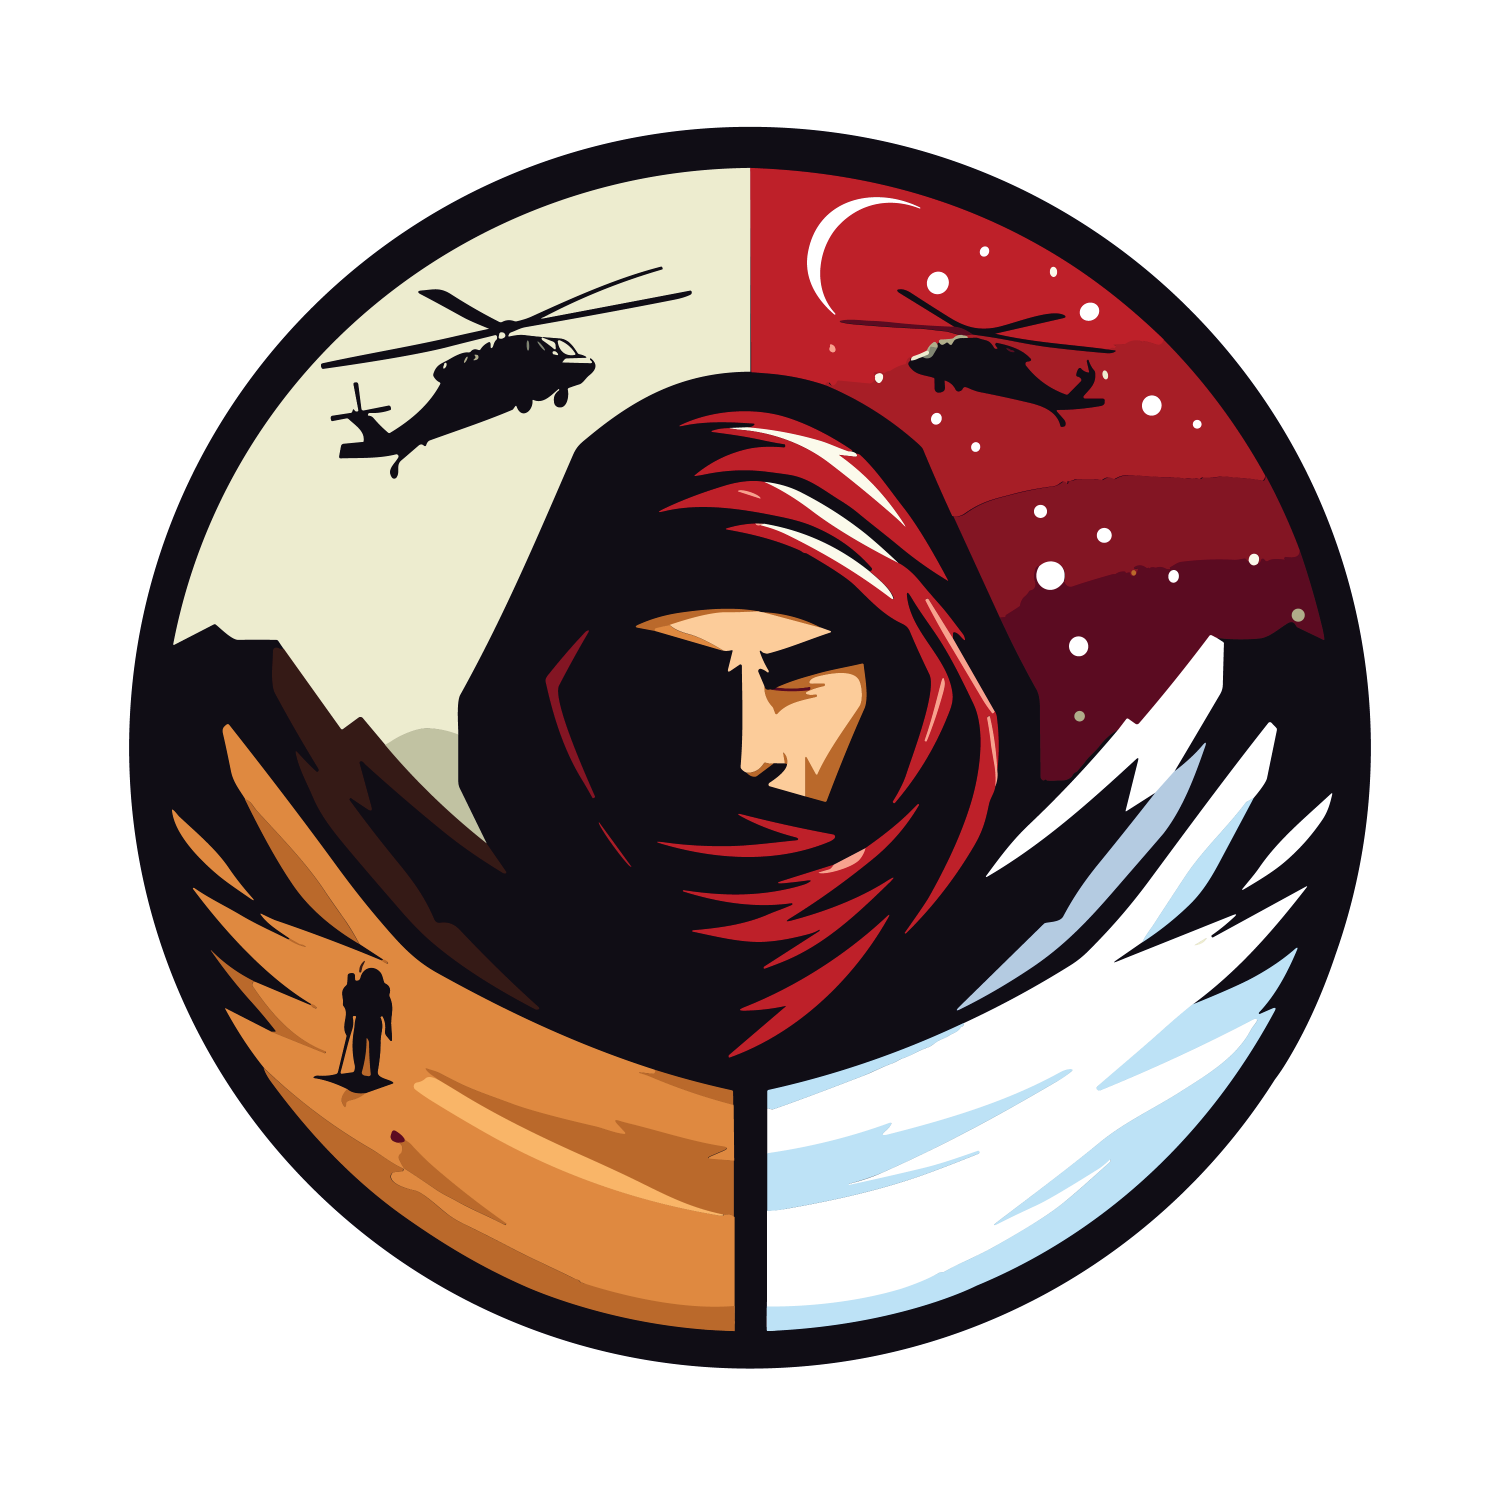 HHC 2-10 AHB "Nomads"